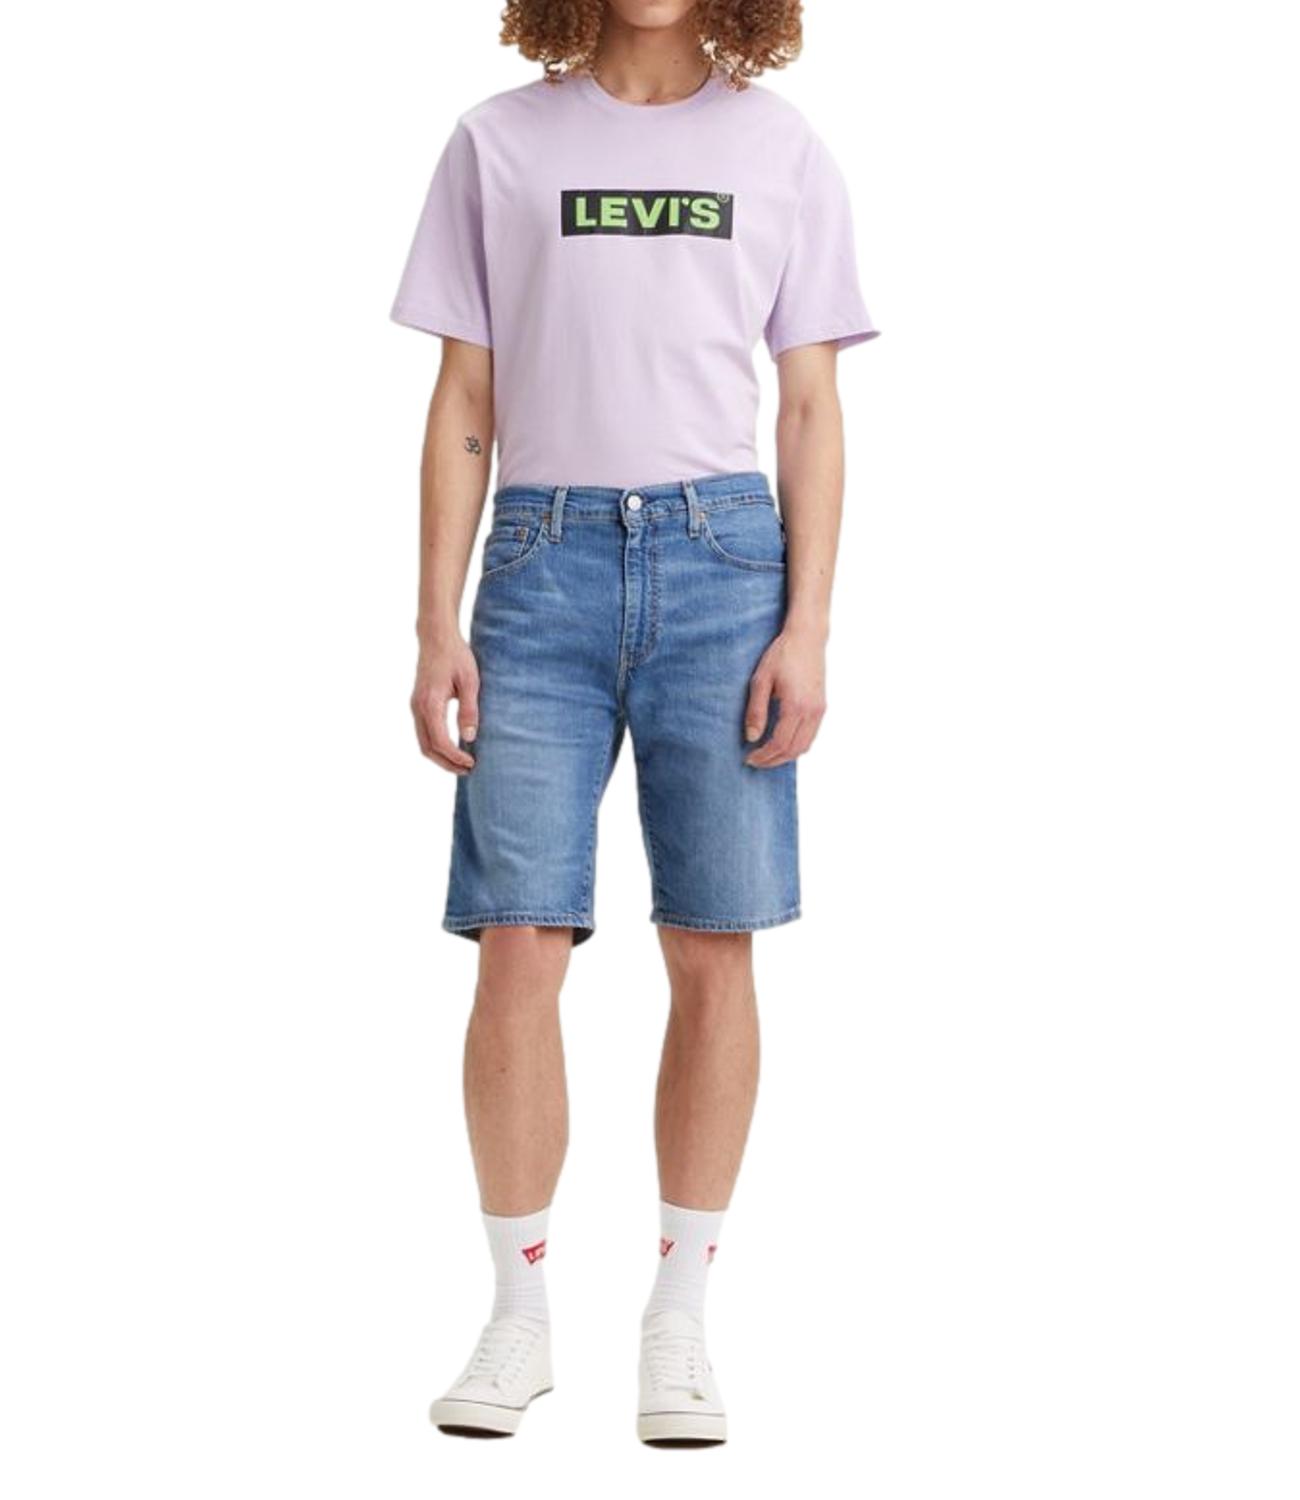 LEVI'S Men's denim shorts